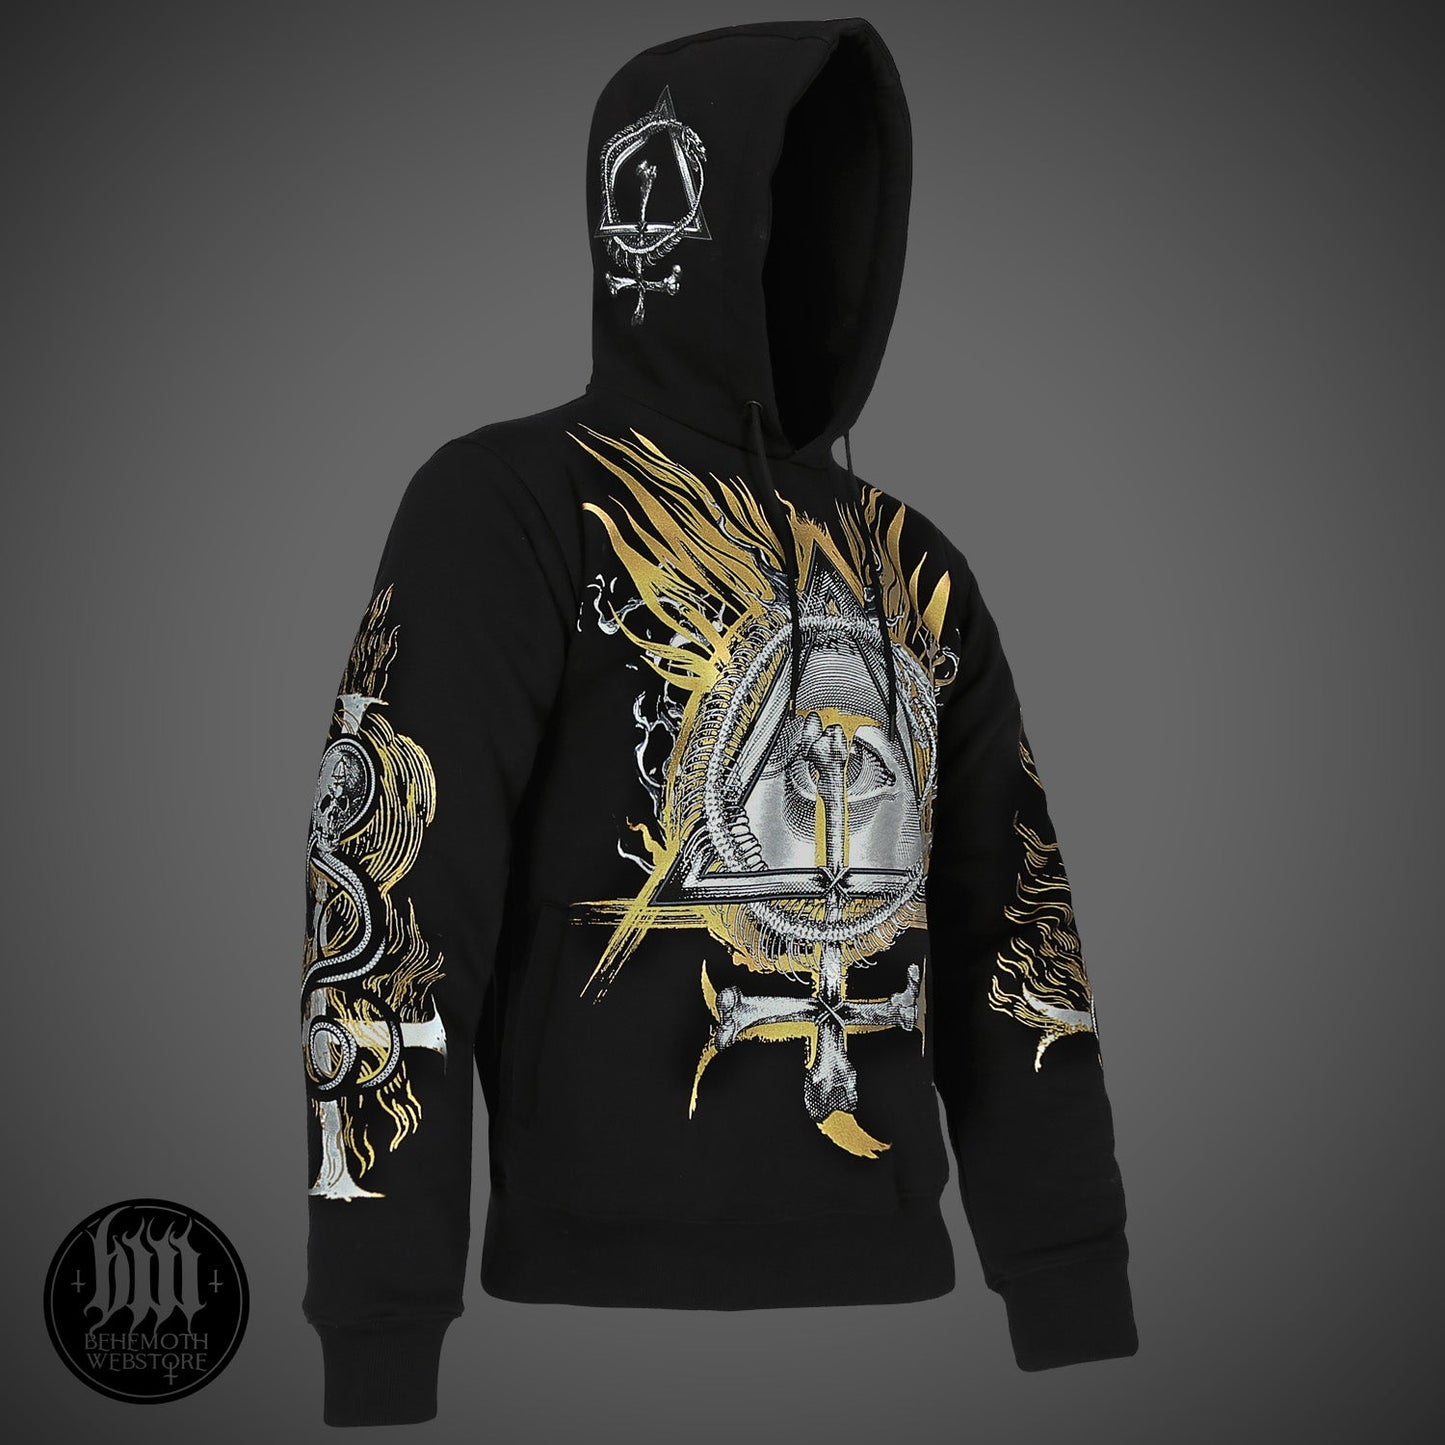 Behemoth 'Contra' hooded sweatshirt